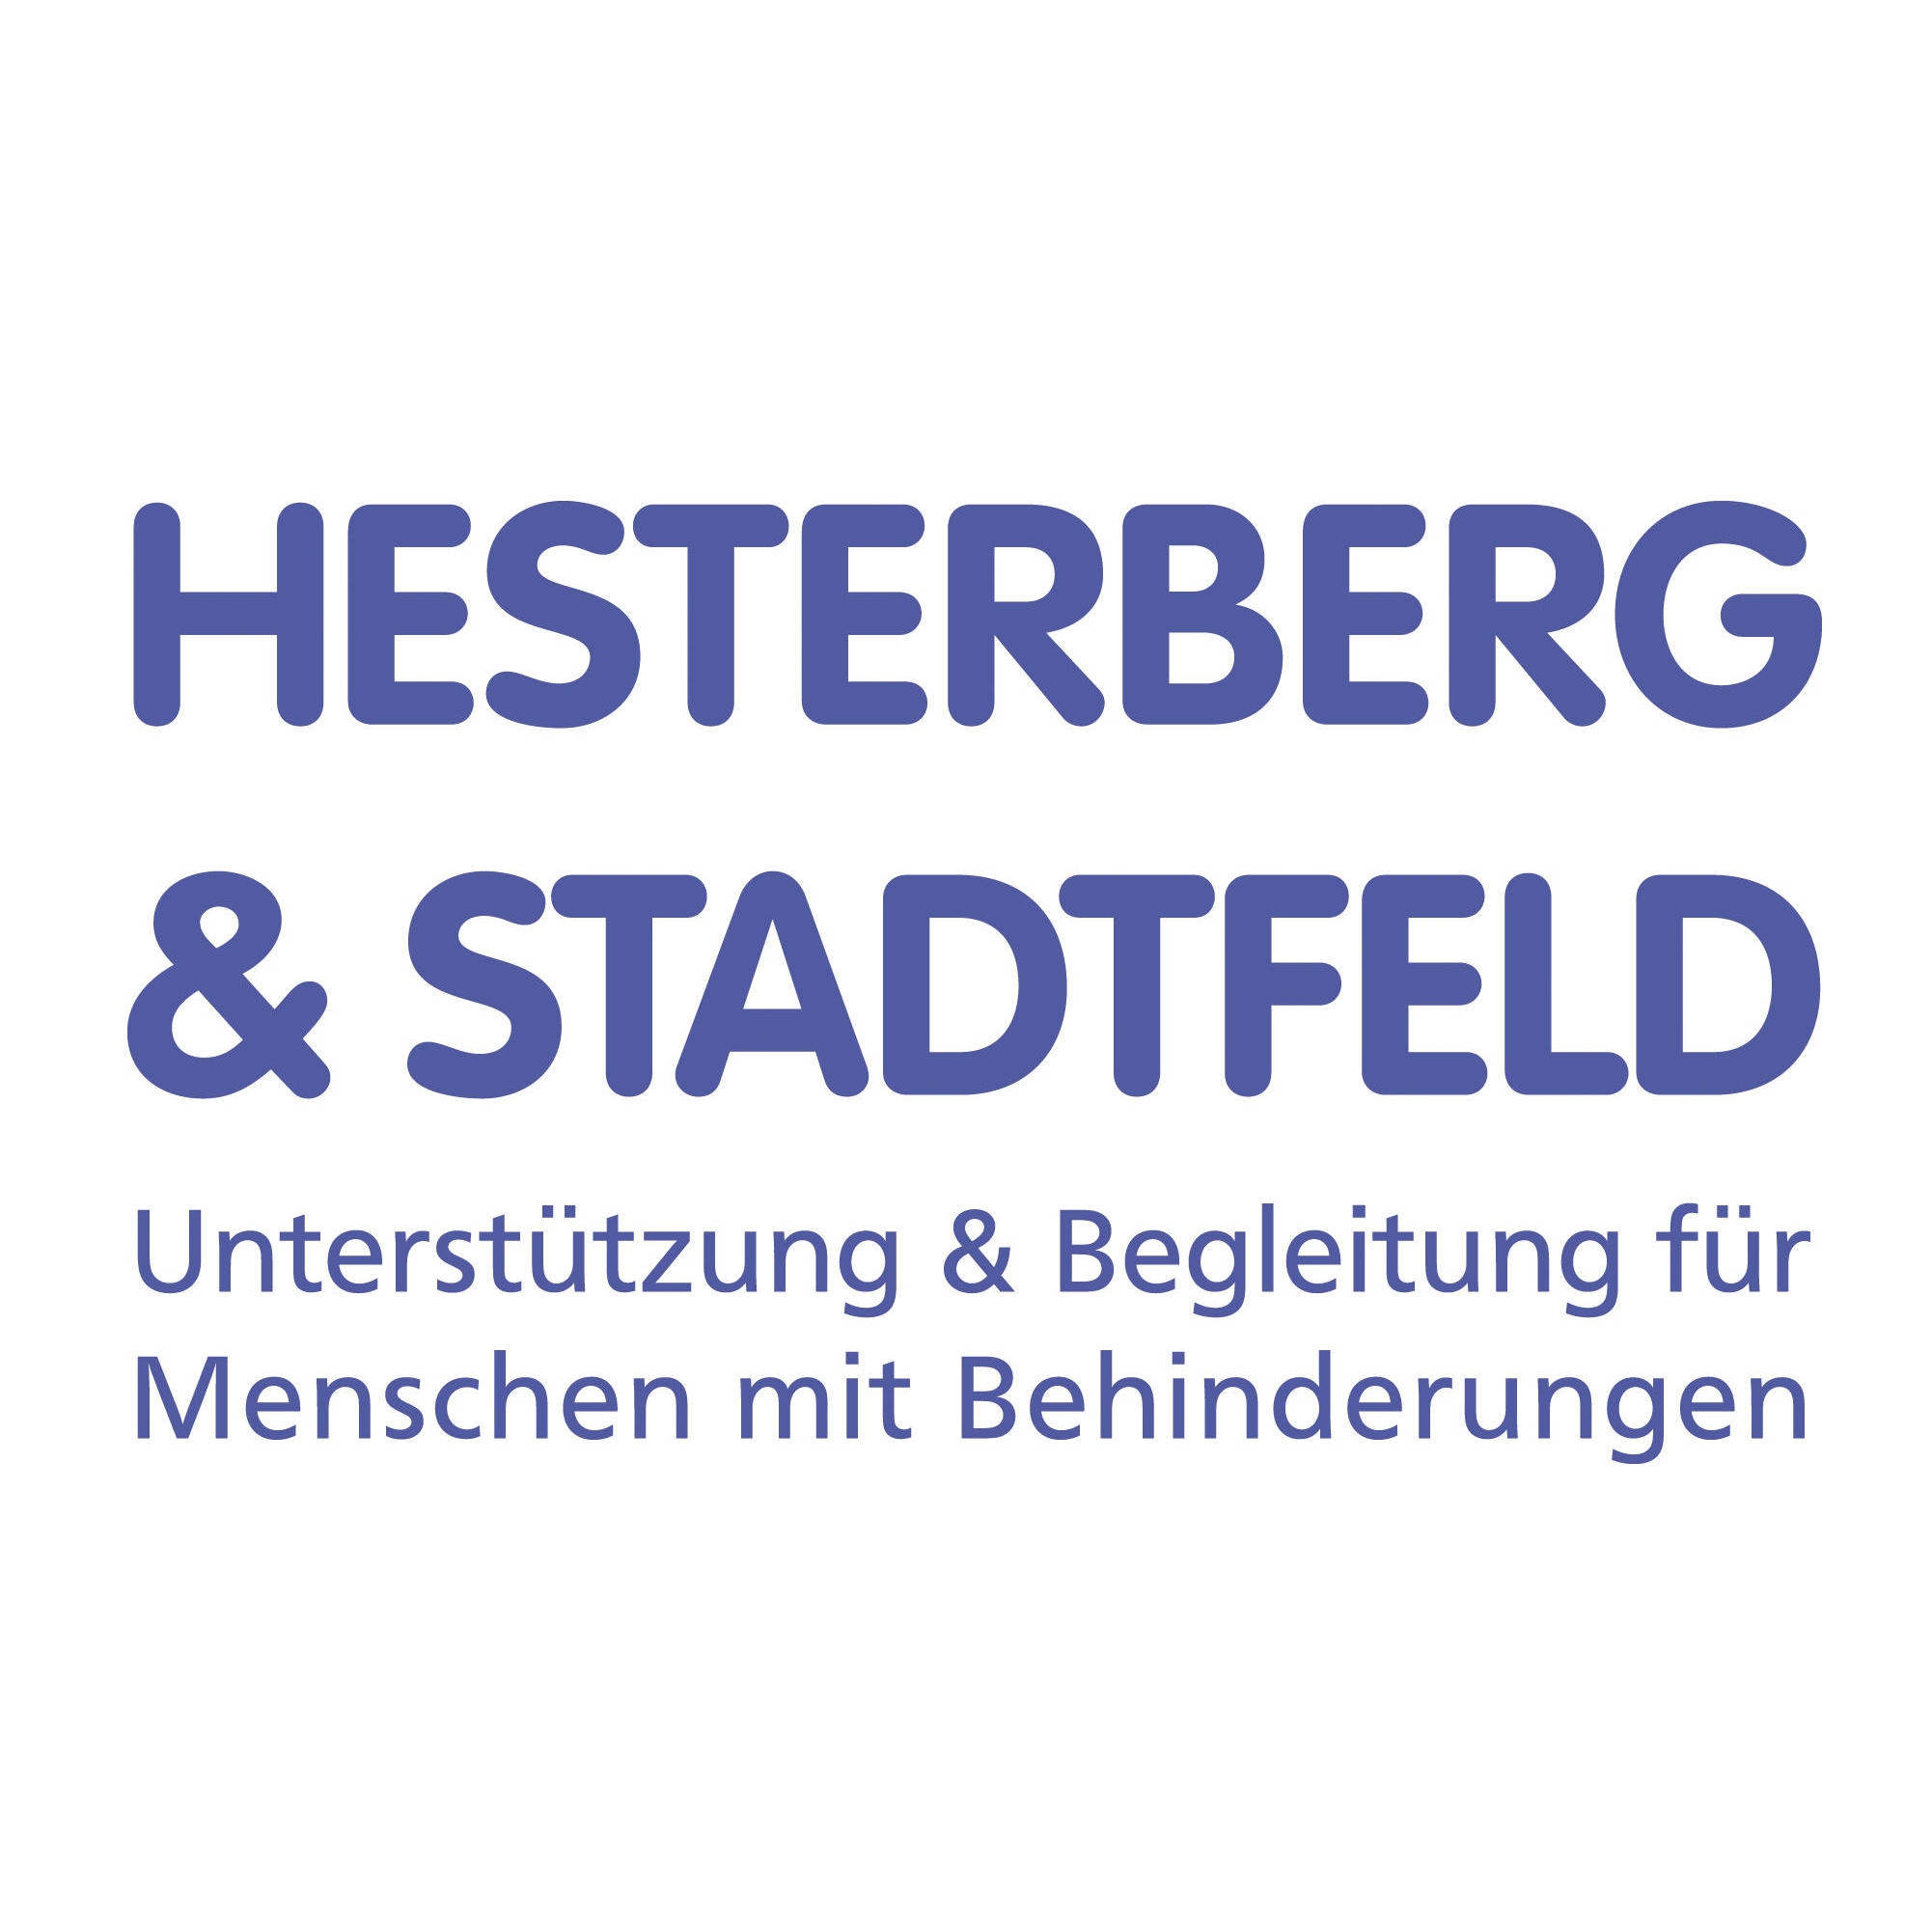 Hesterberg & Stadtfeld gGmbH Hesterberg 87 in Schleswig - Logo